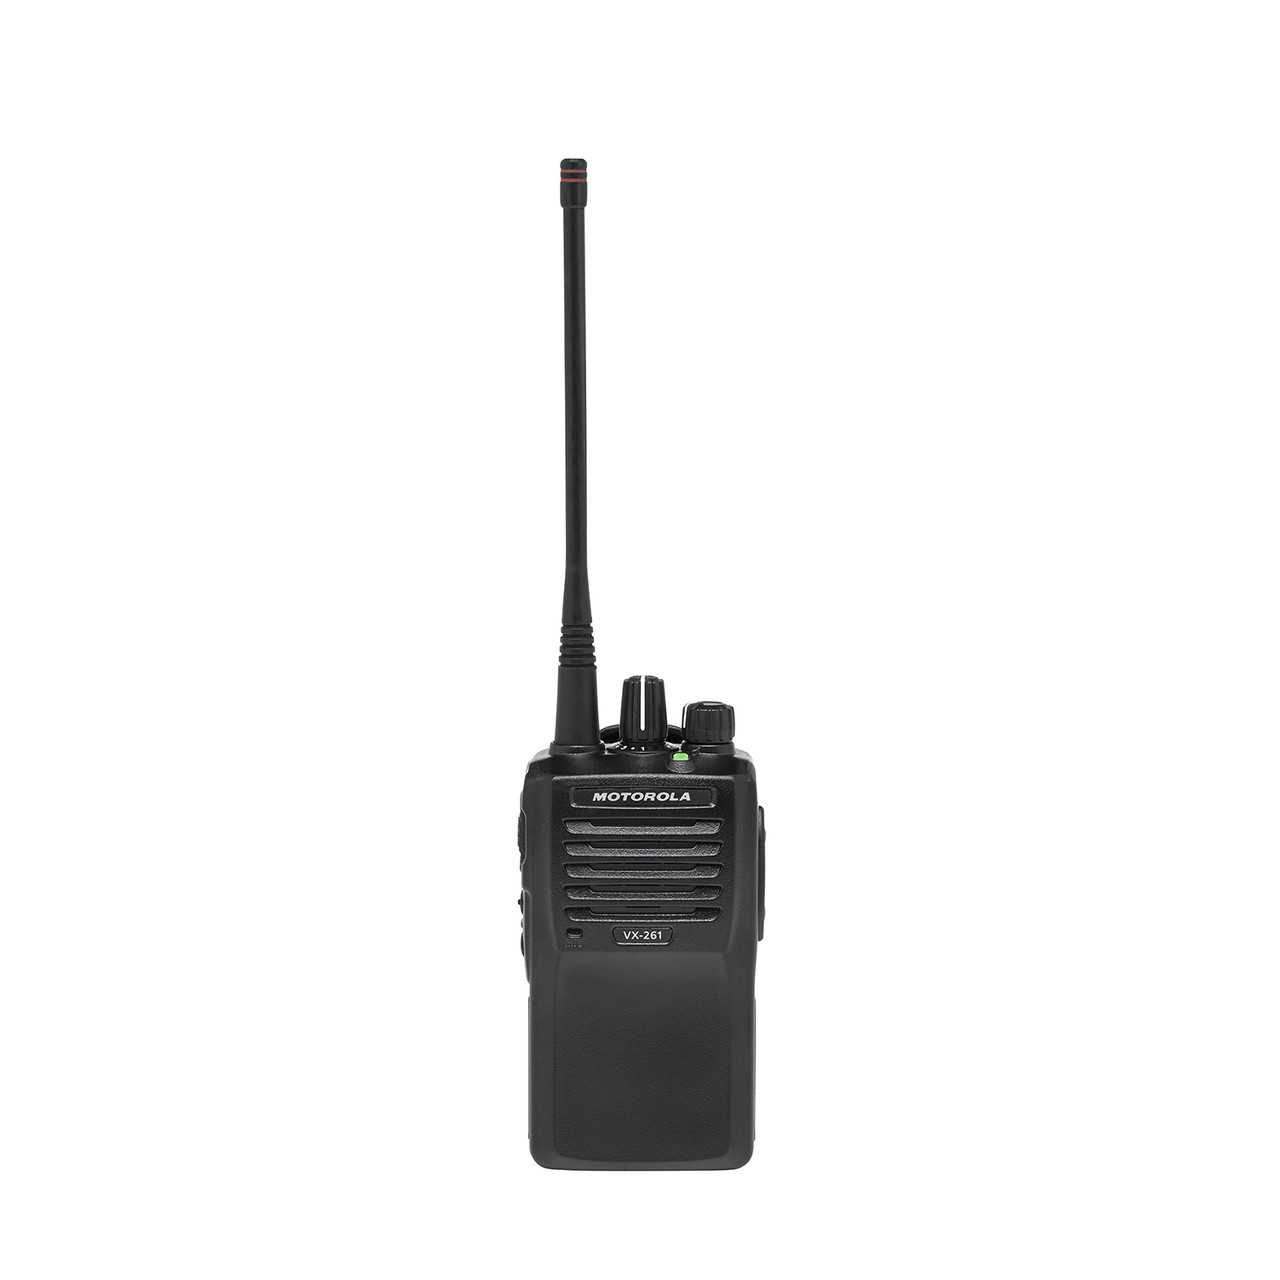 Motorola VX-261 | VX-261 | Motorola VX-261 5 Watt Two Way Radio